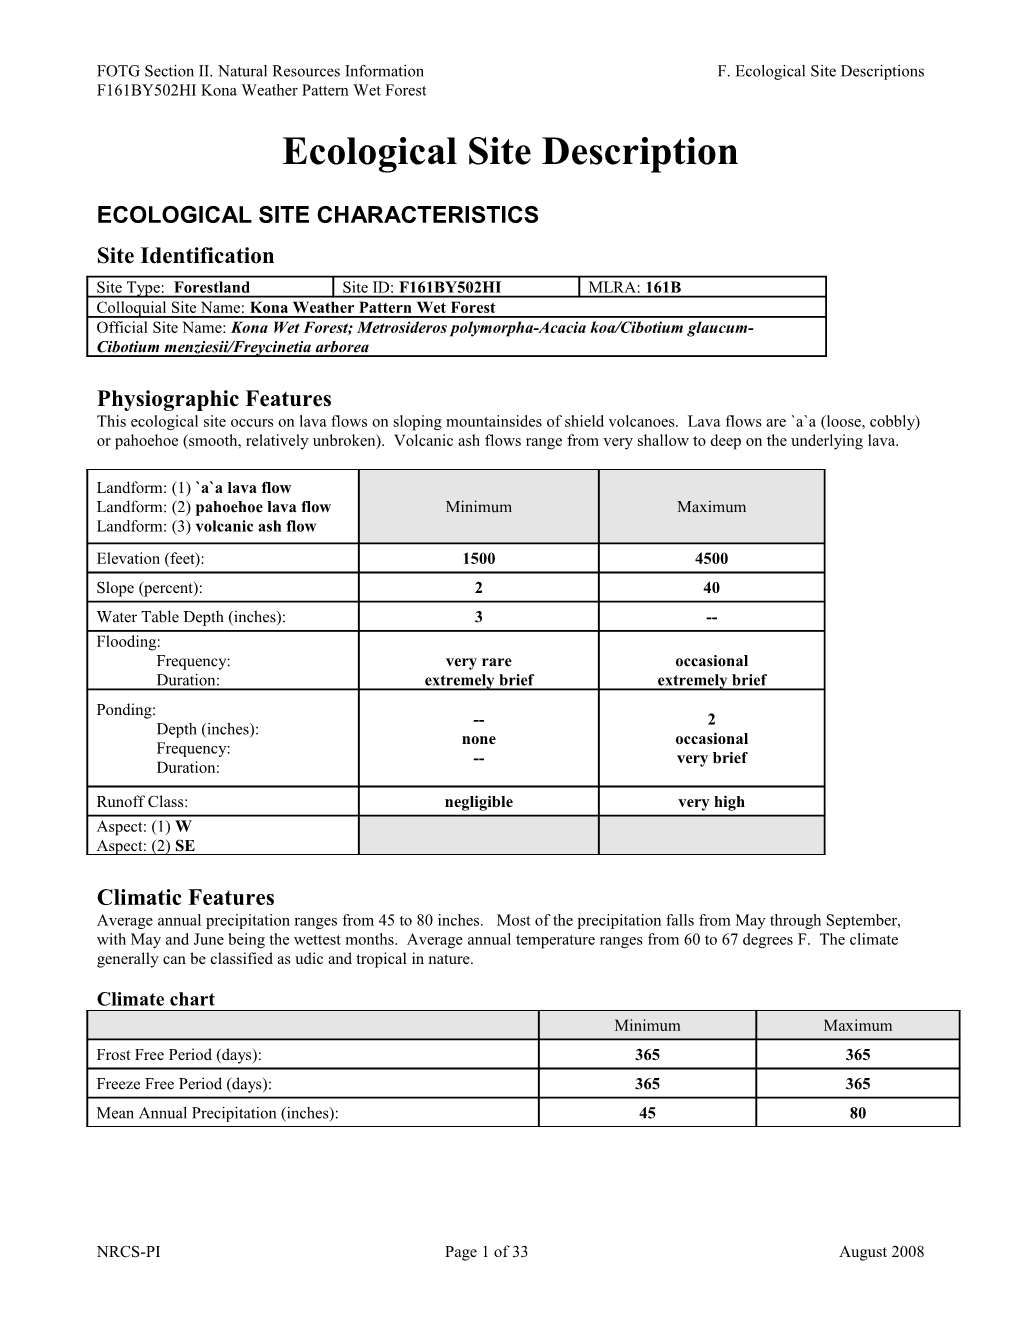 FOTG Section II. Natural Resources Information F. Ecological Site Descriptions s1